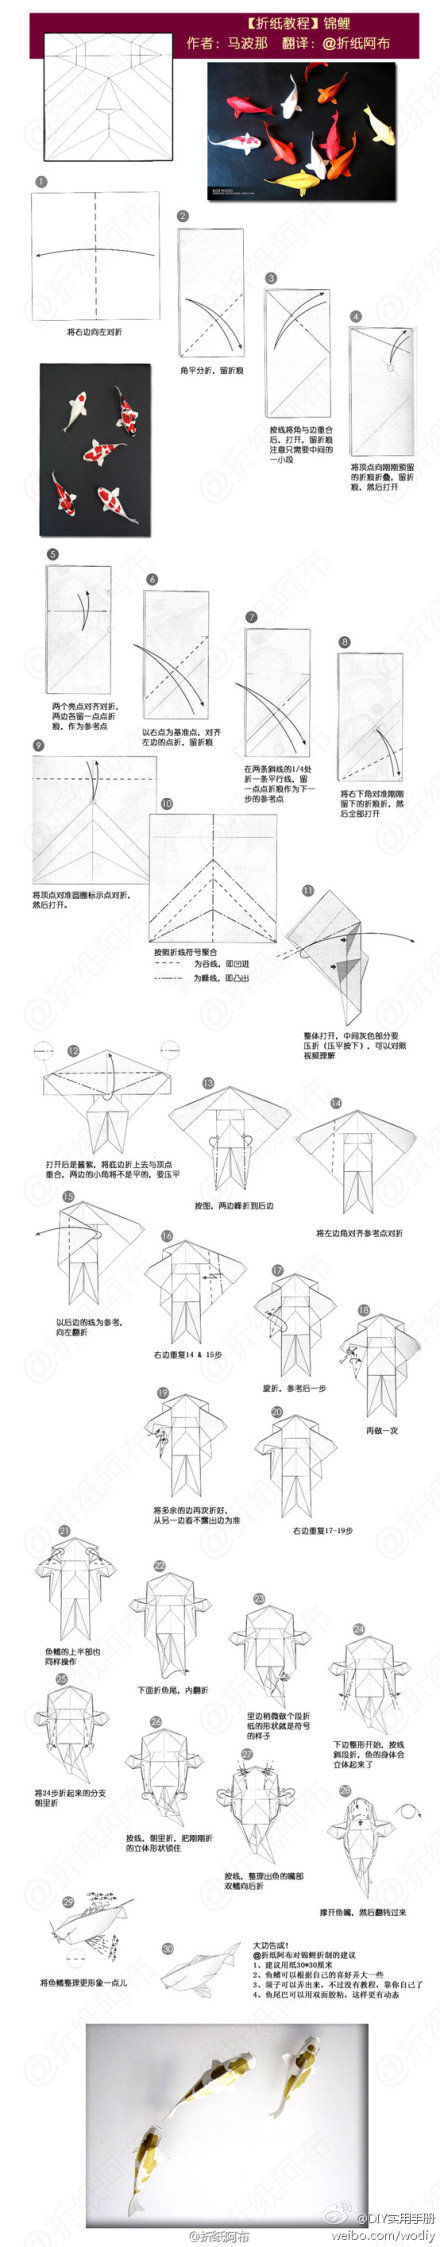 origami koi instructions